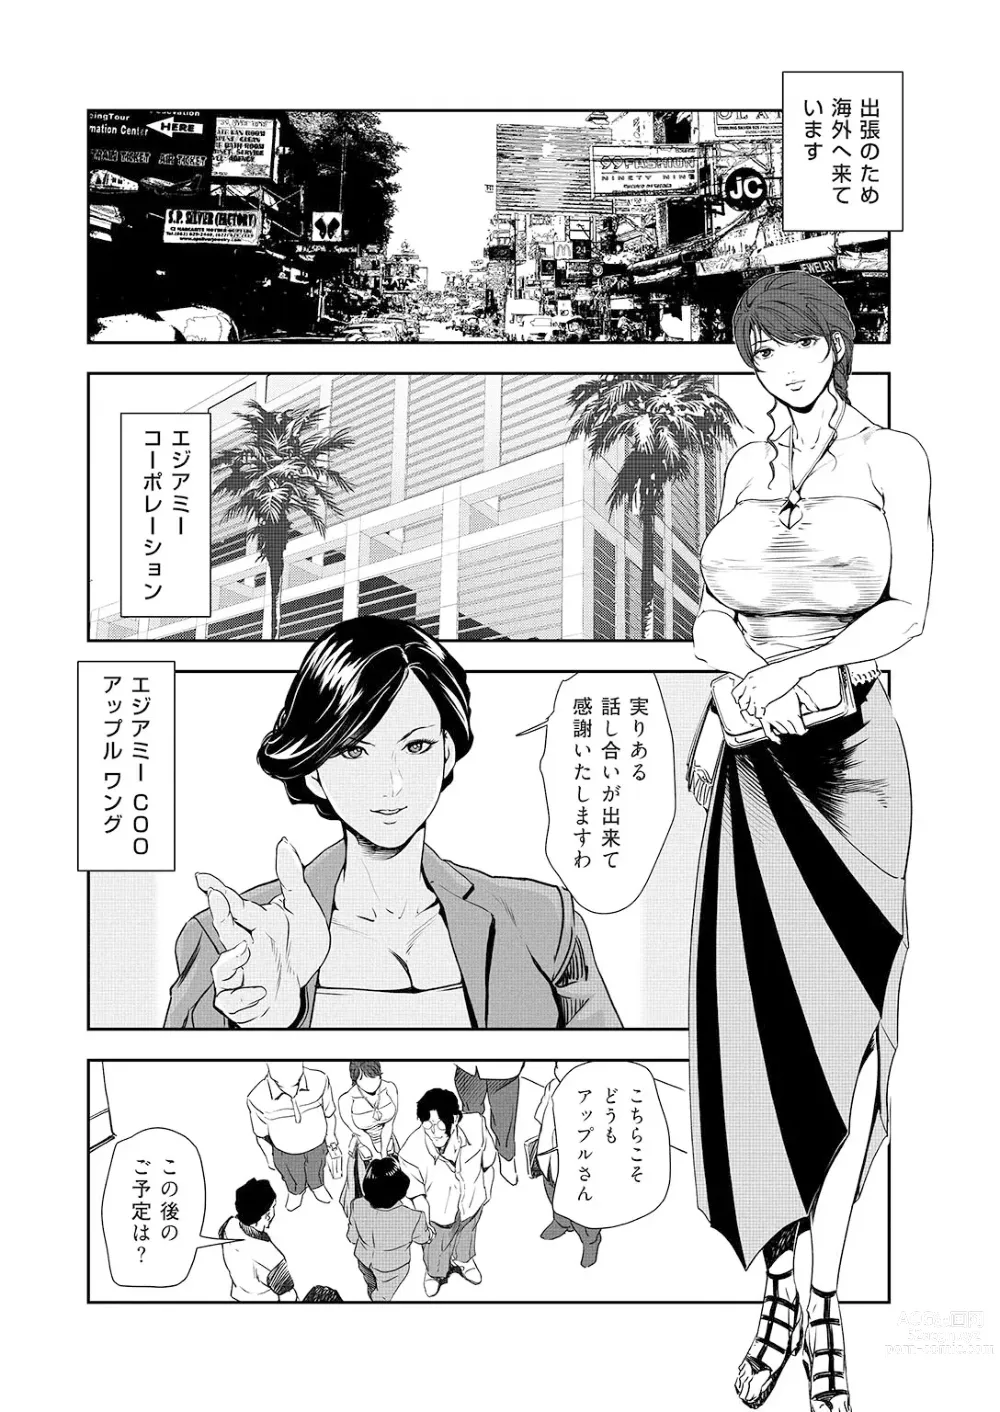 Page 3 of manga Nikuhisyo Yukiko 44